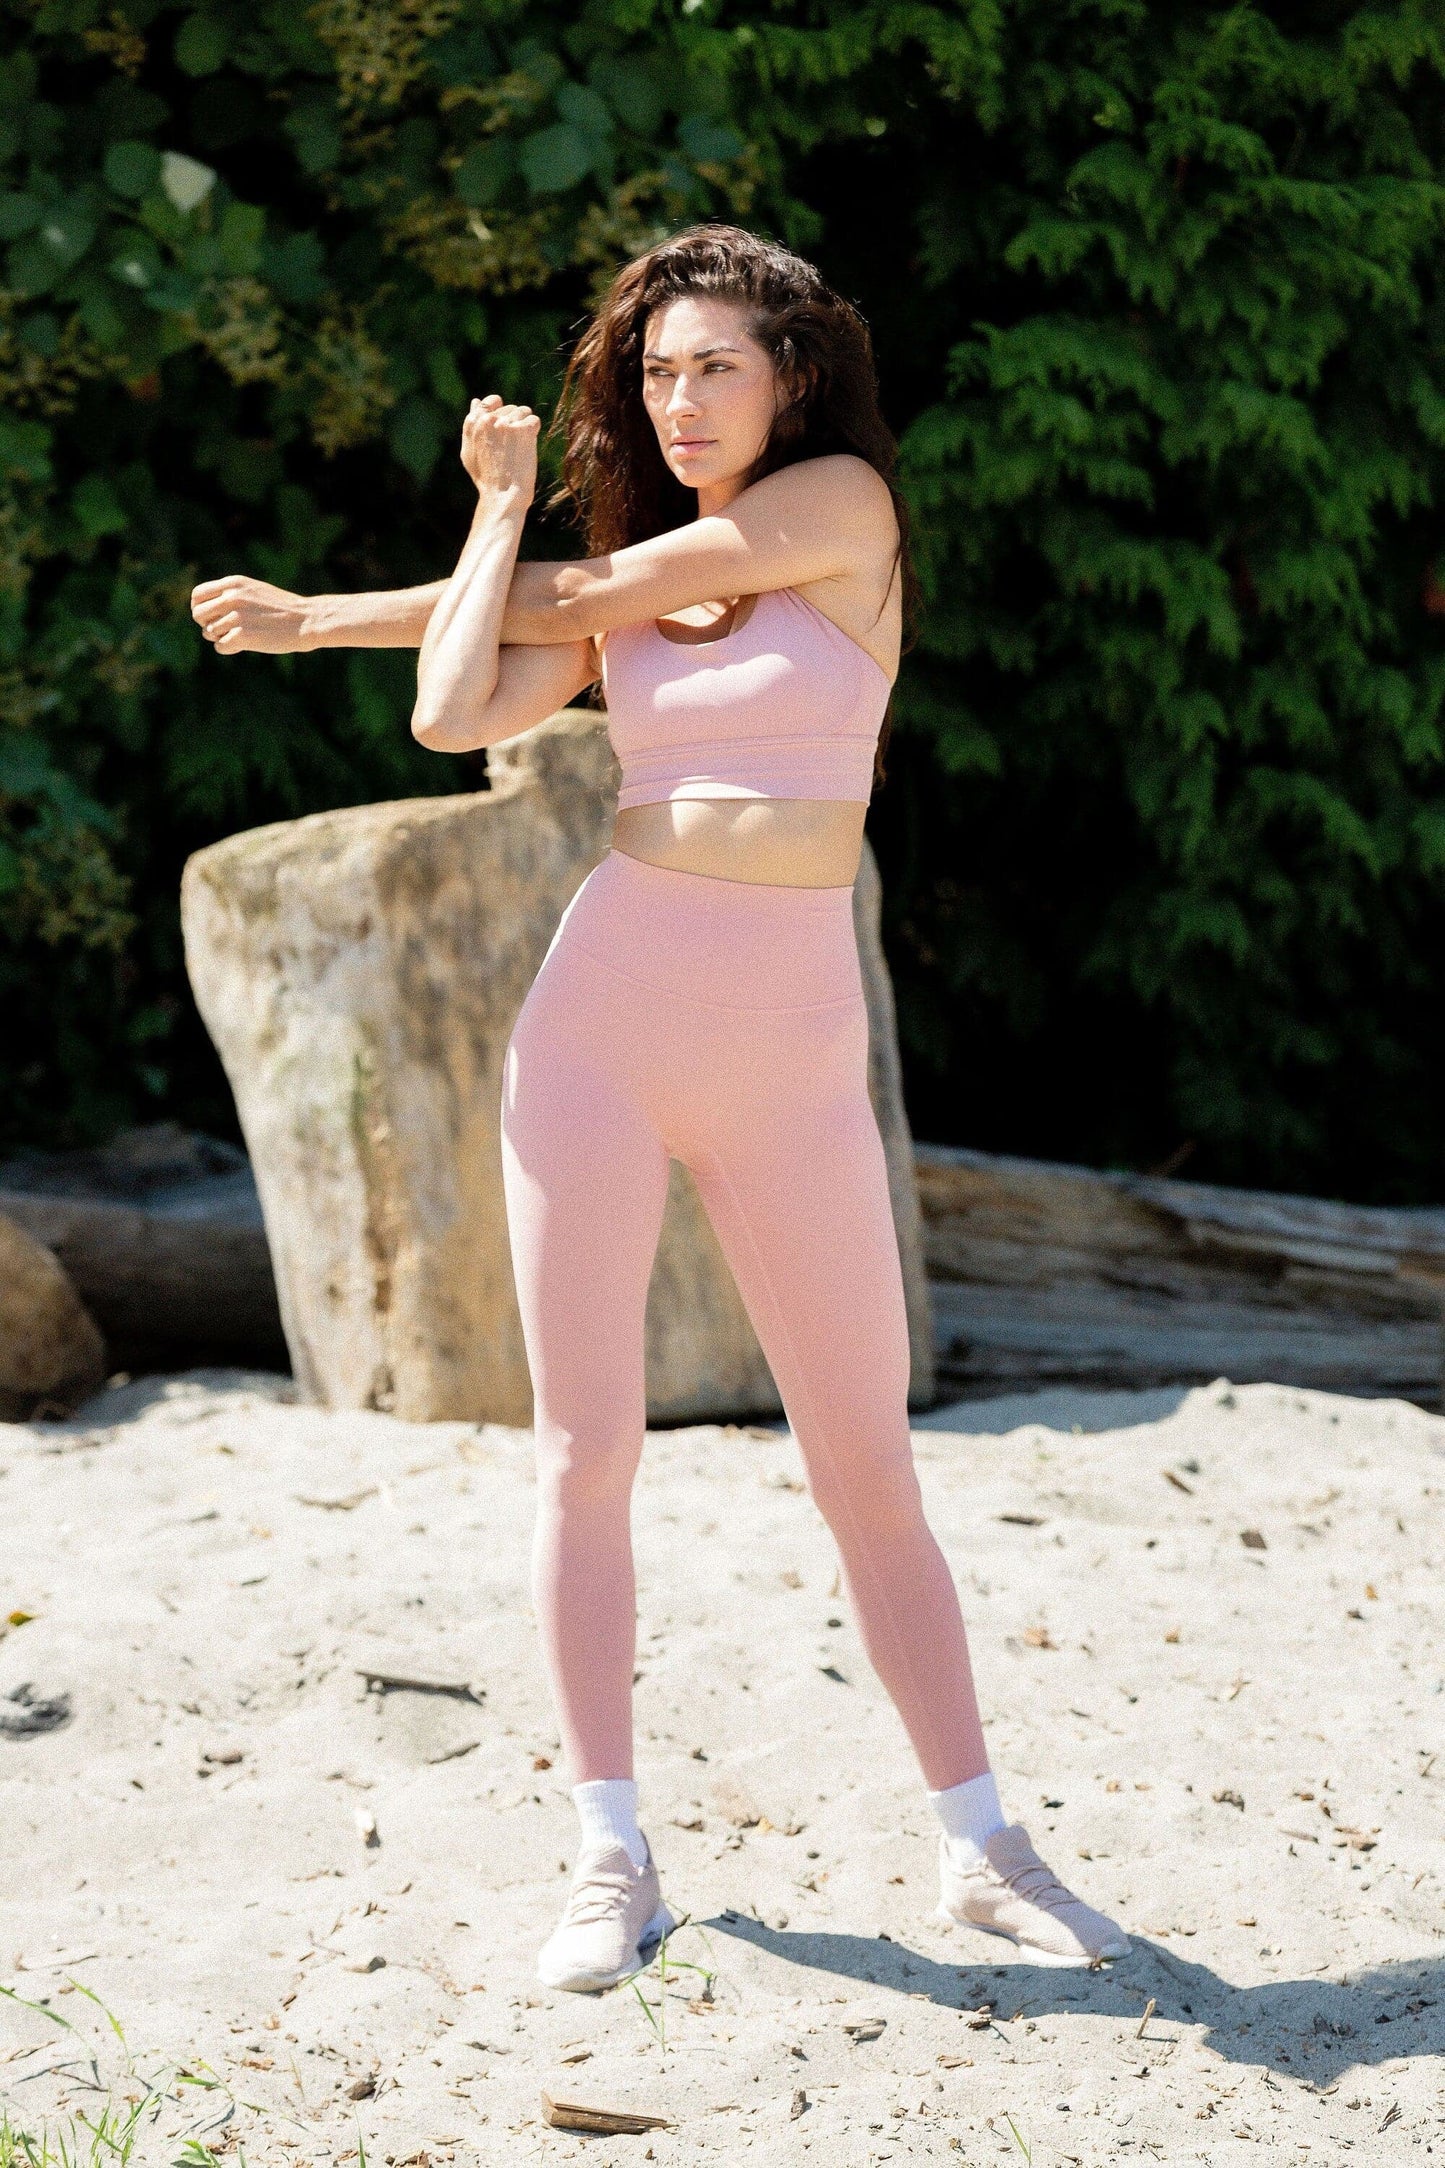 The Workout Sports Bra - Pink – MBody